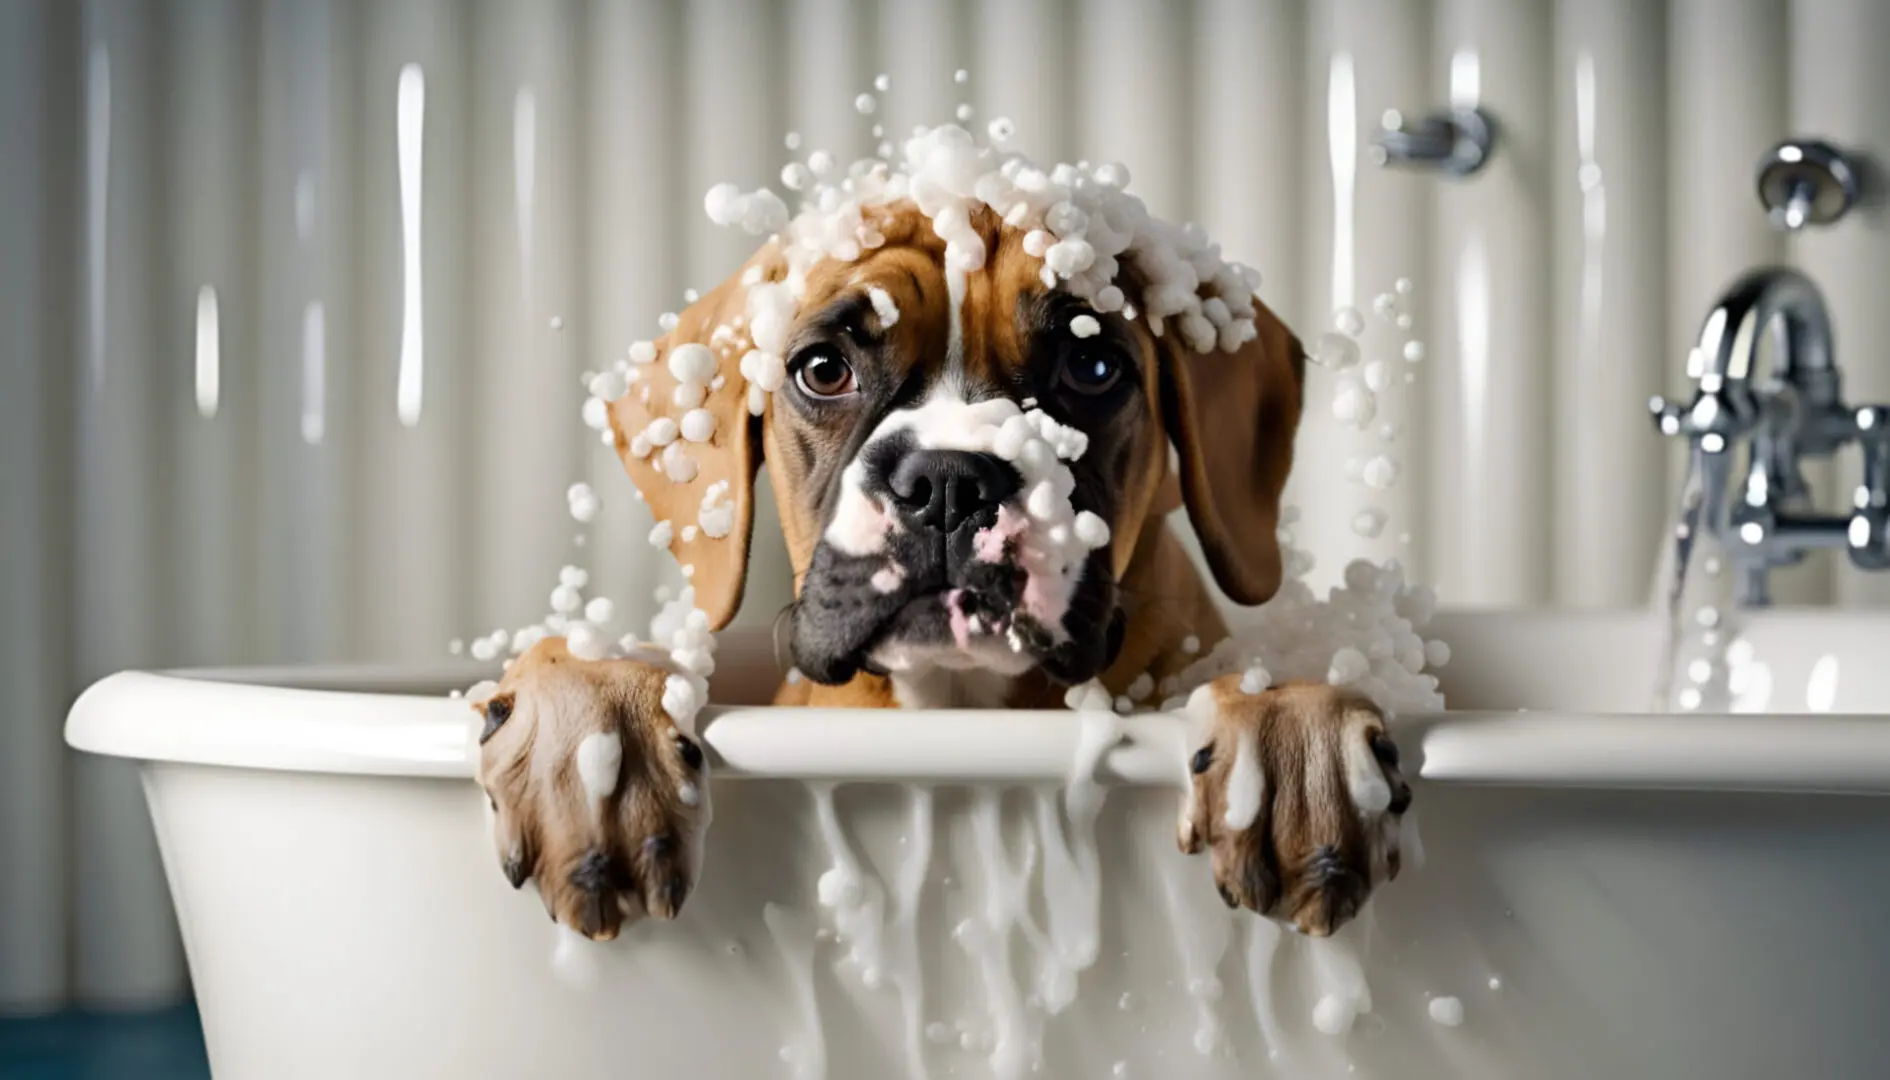 A dog is taking a bath in the tub